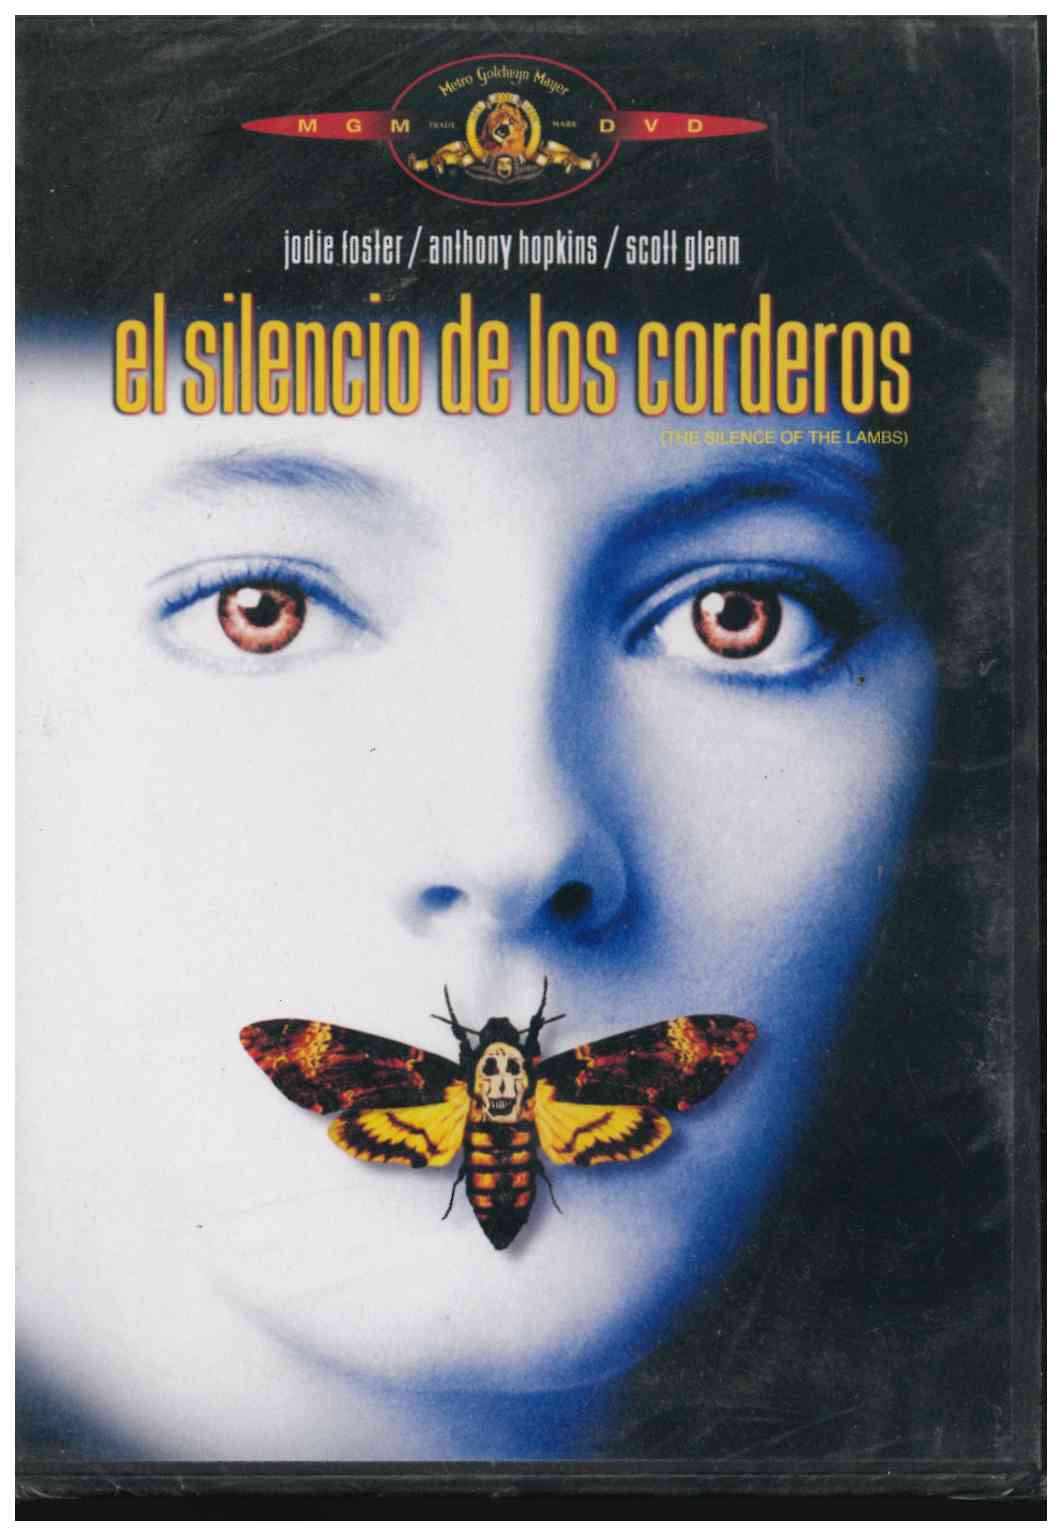 El silencio de los corderos. MGM DVD. Jodie Foster, Anthony Hopkins, Sclot Glenn